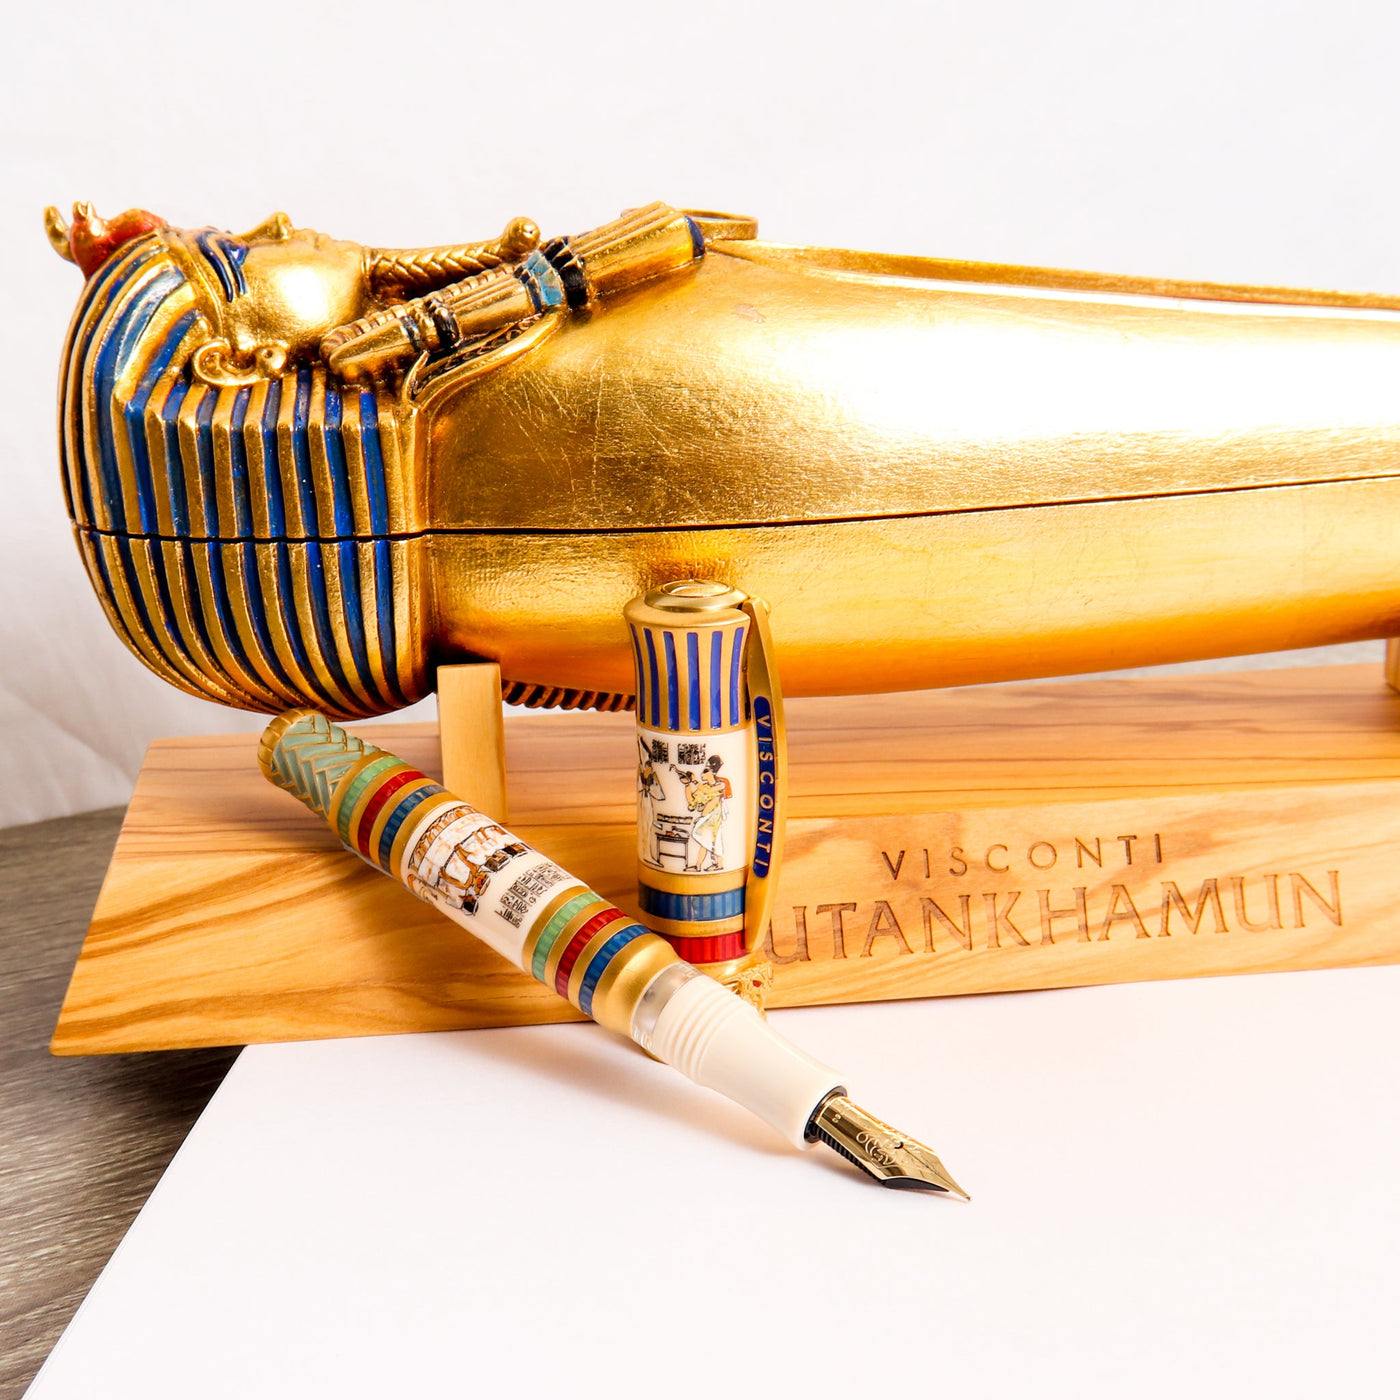 Visconti Tutankhamun Fountain Pen